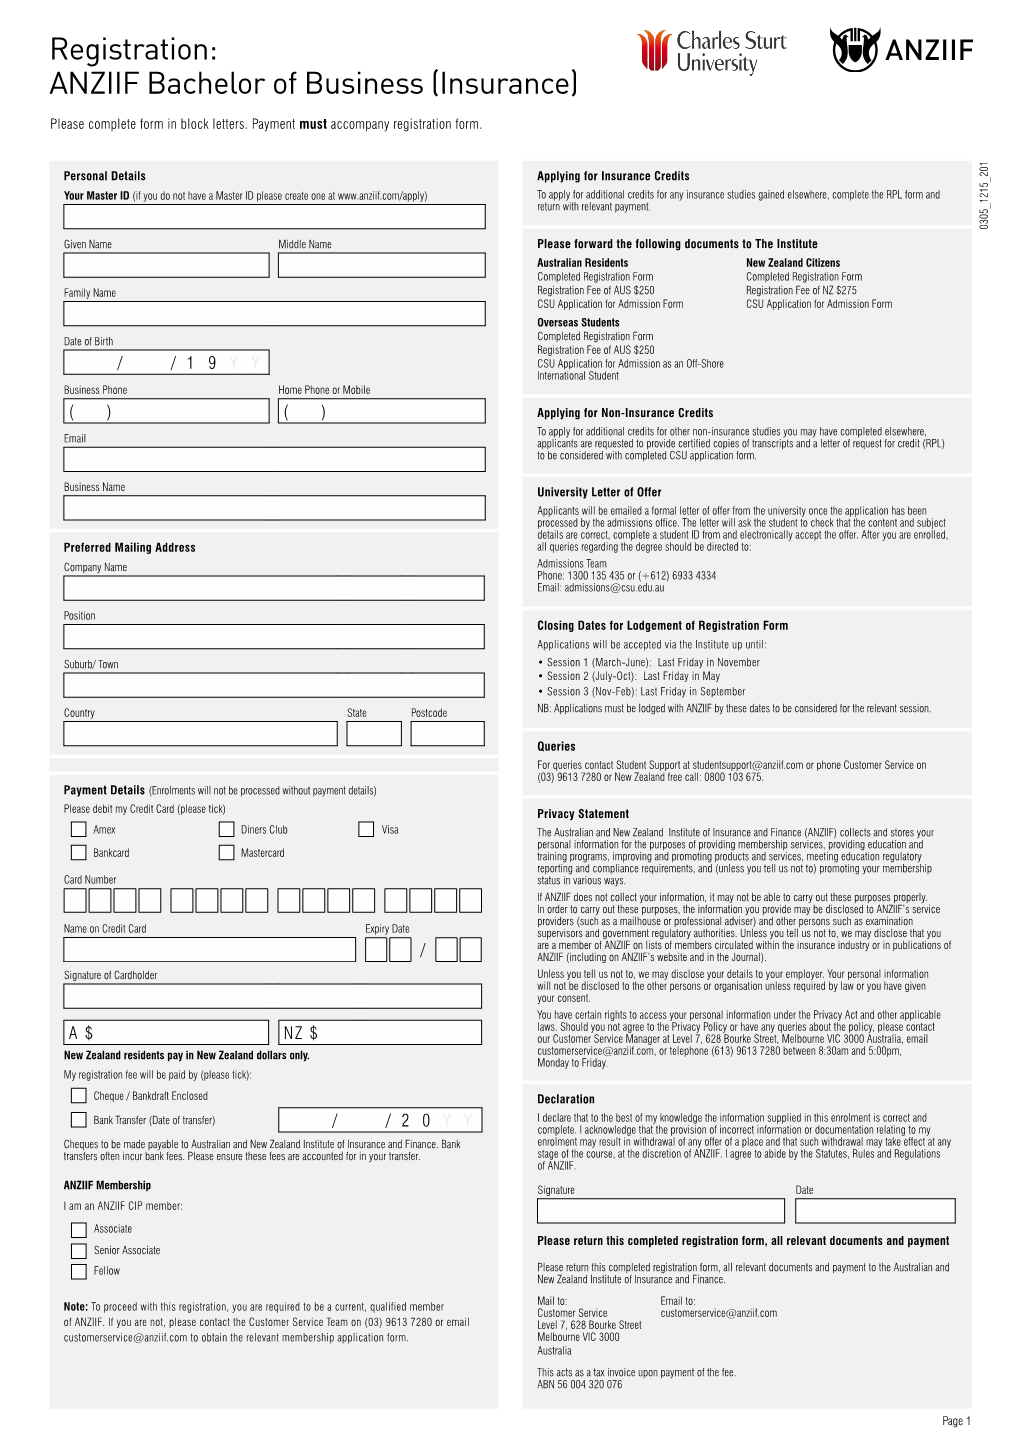 ANZIIF Registration Form